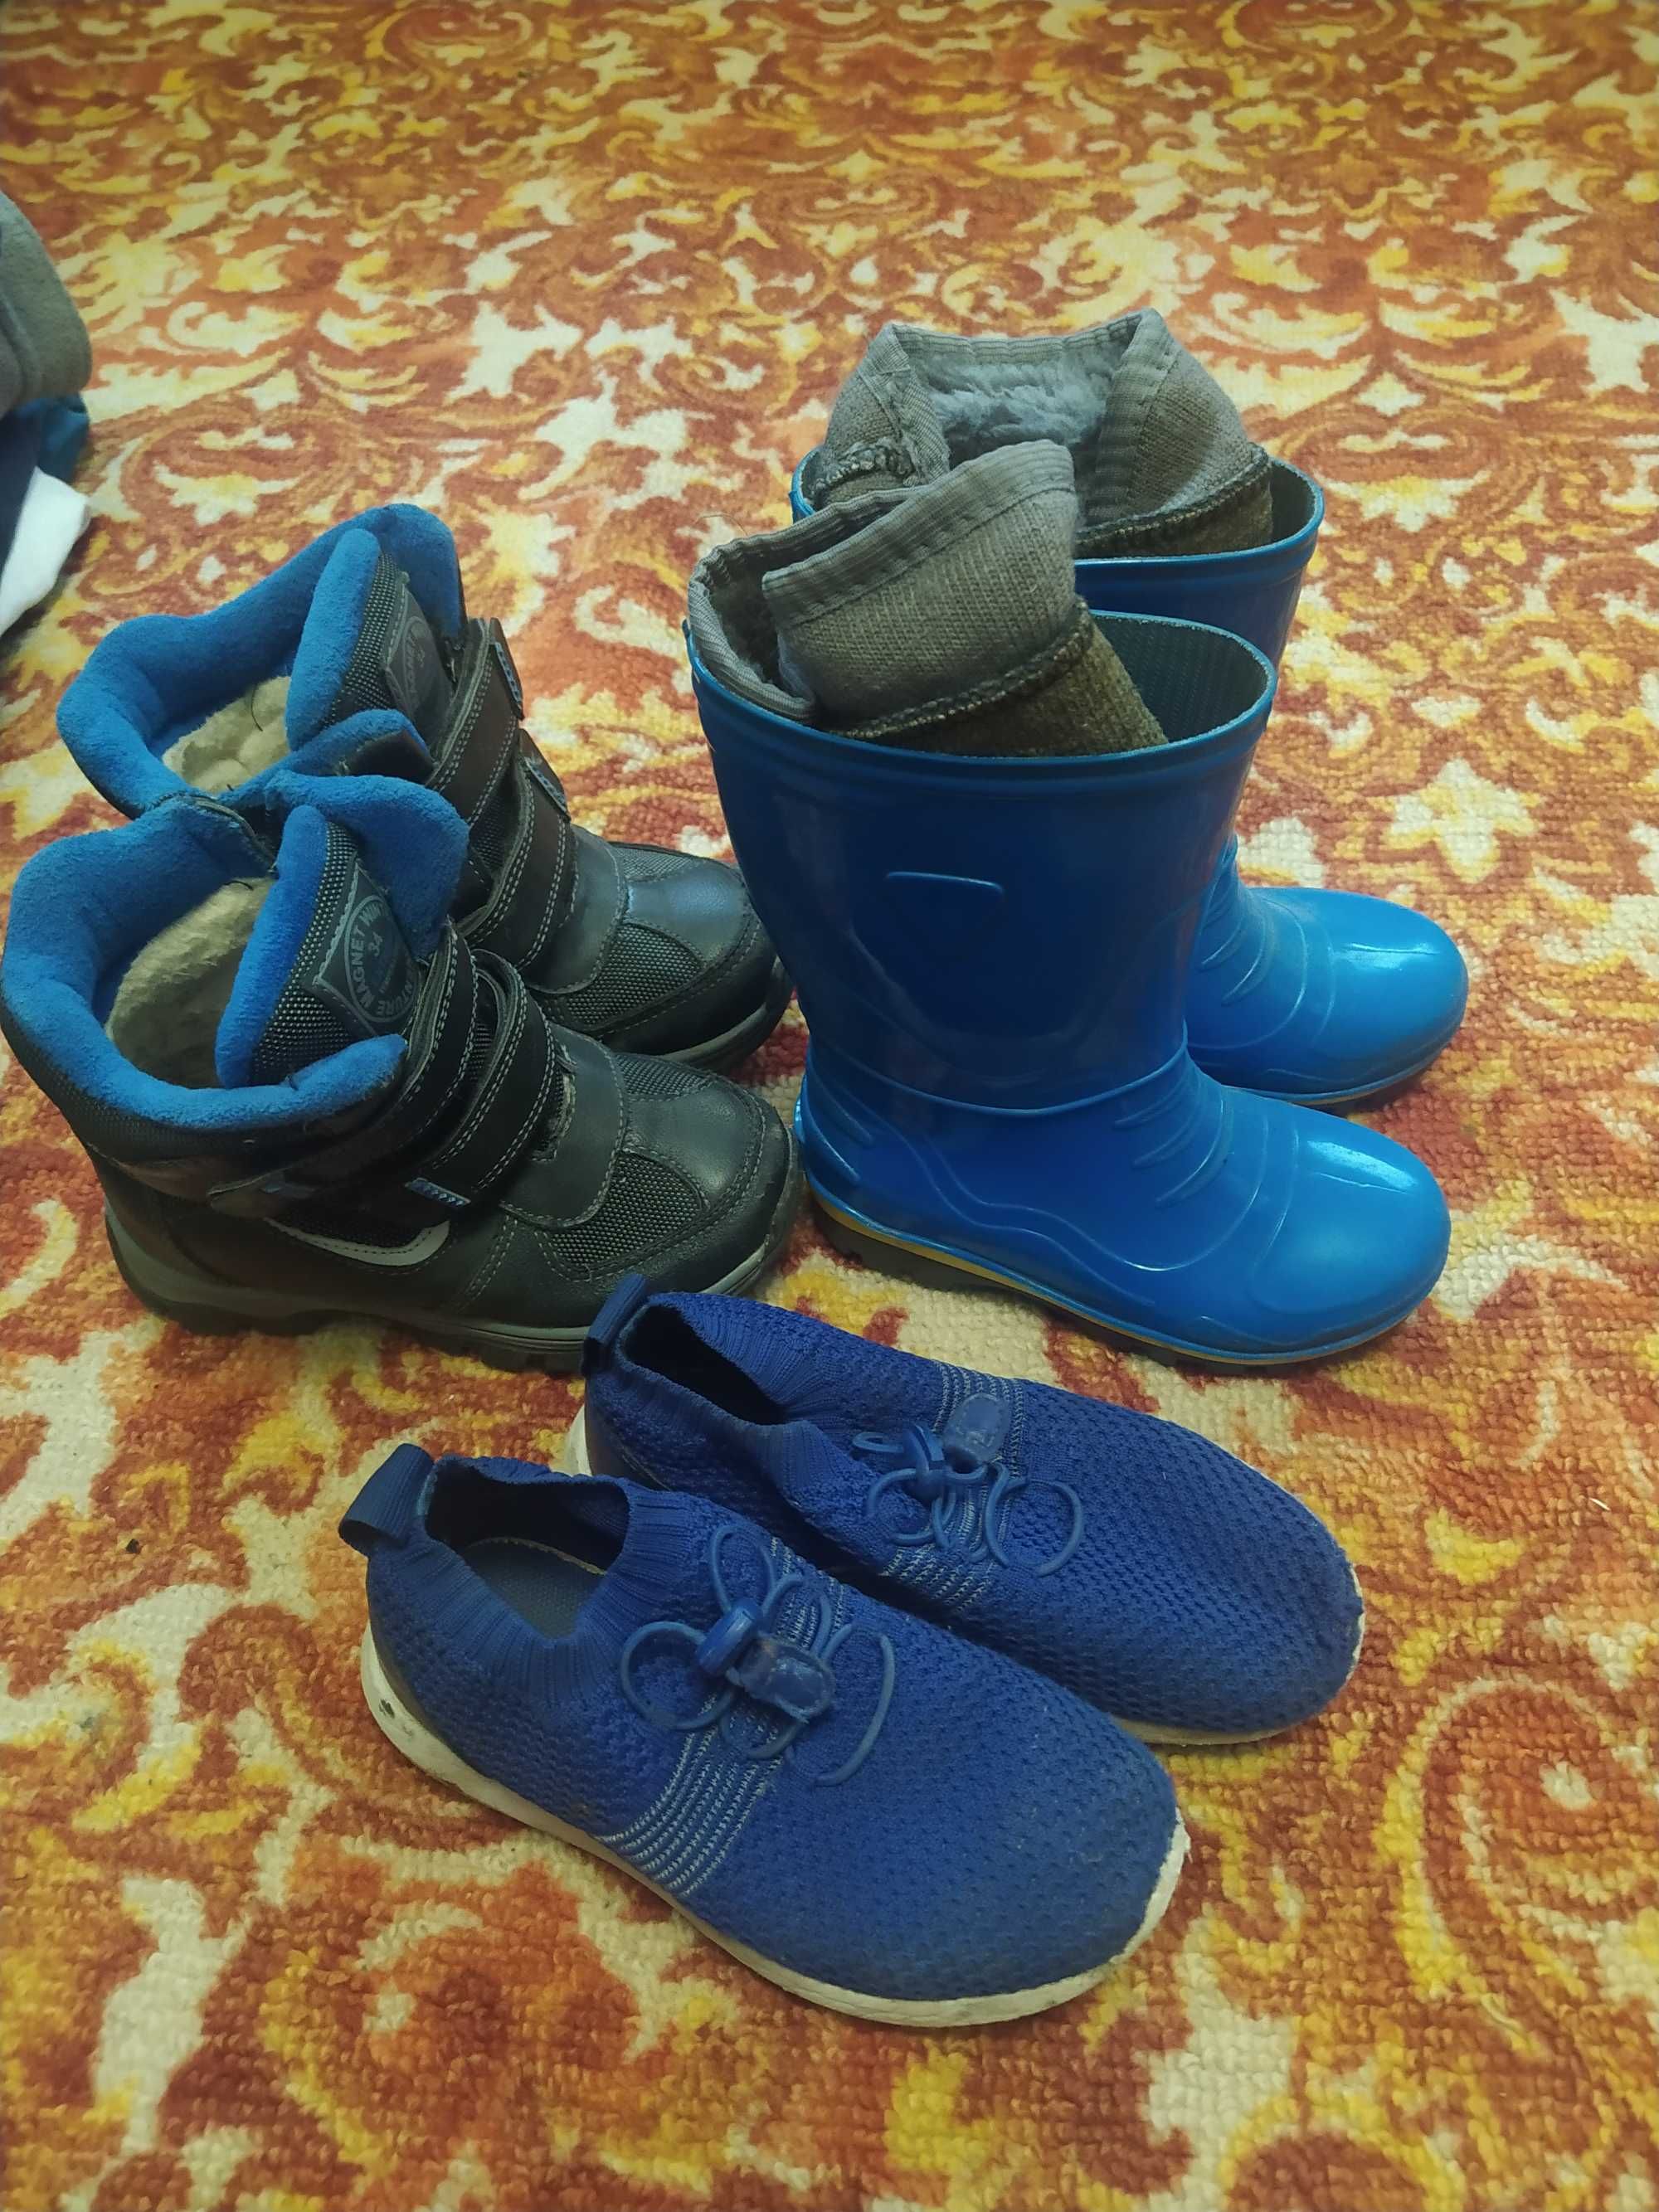 Зимові та гумові чоботи на хлопчика 3-4 роки зимние резиновые сапоги